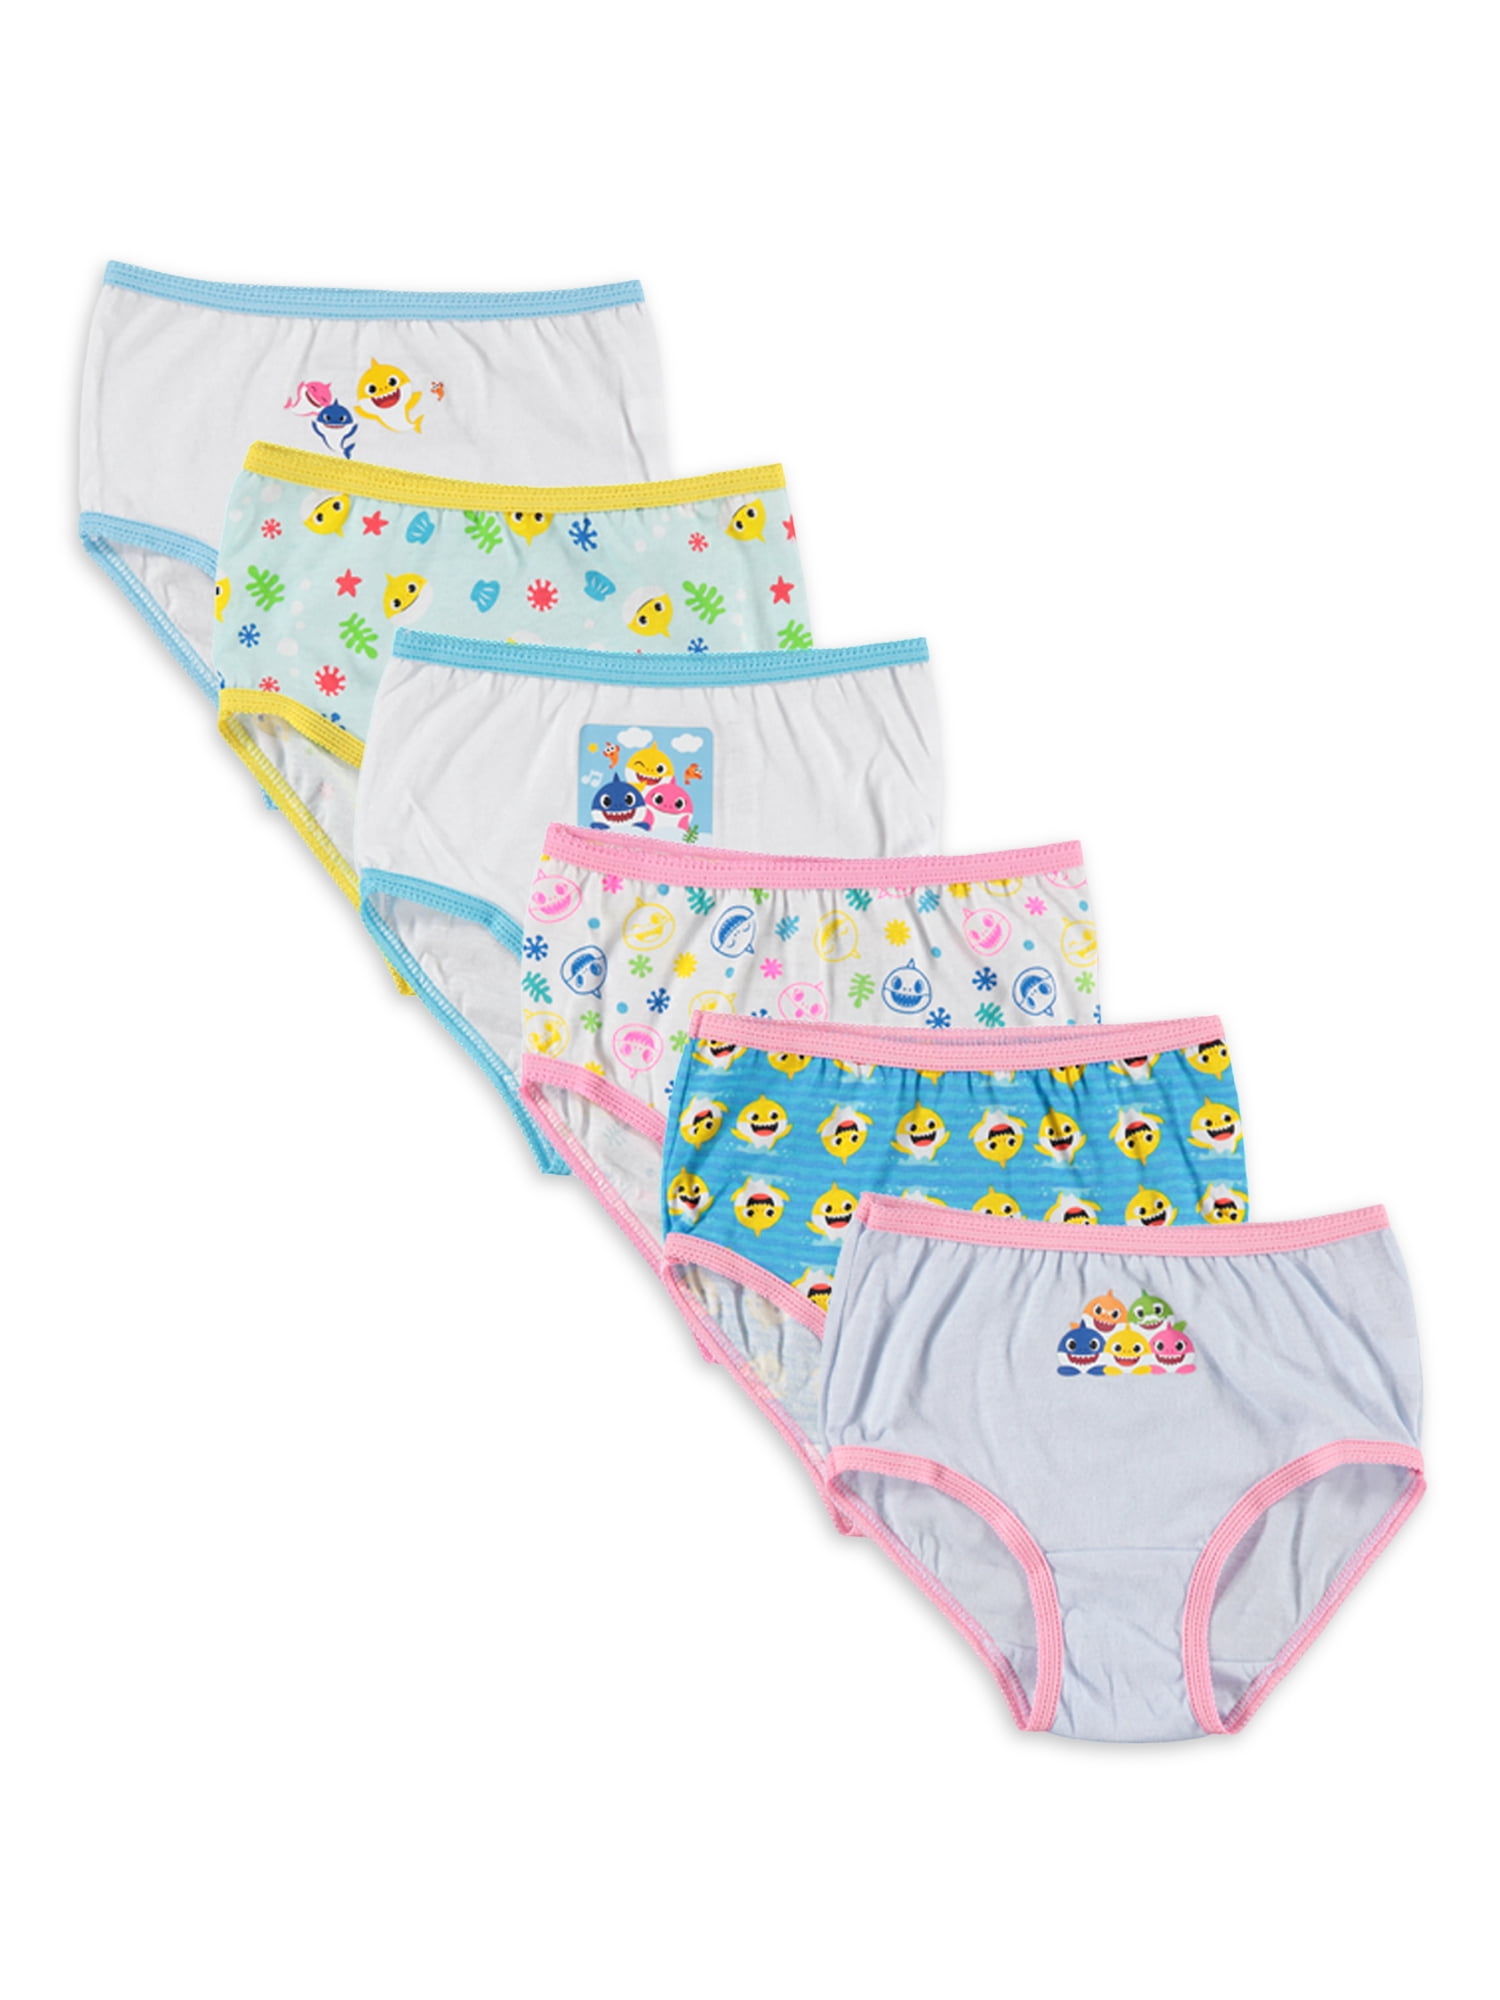 Baby Shark Toddler Girls' Panties, 6 Pack Sizes 2T-4T